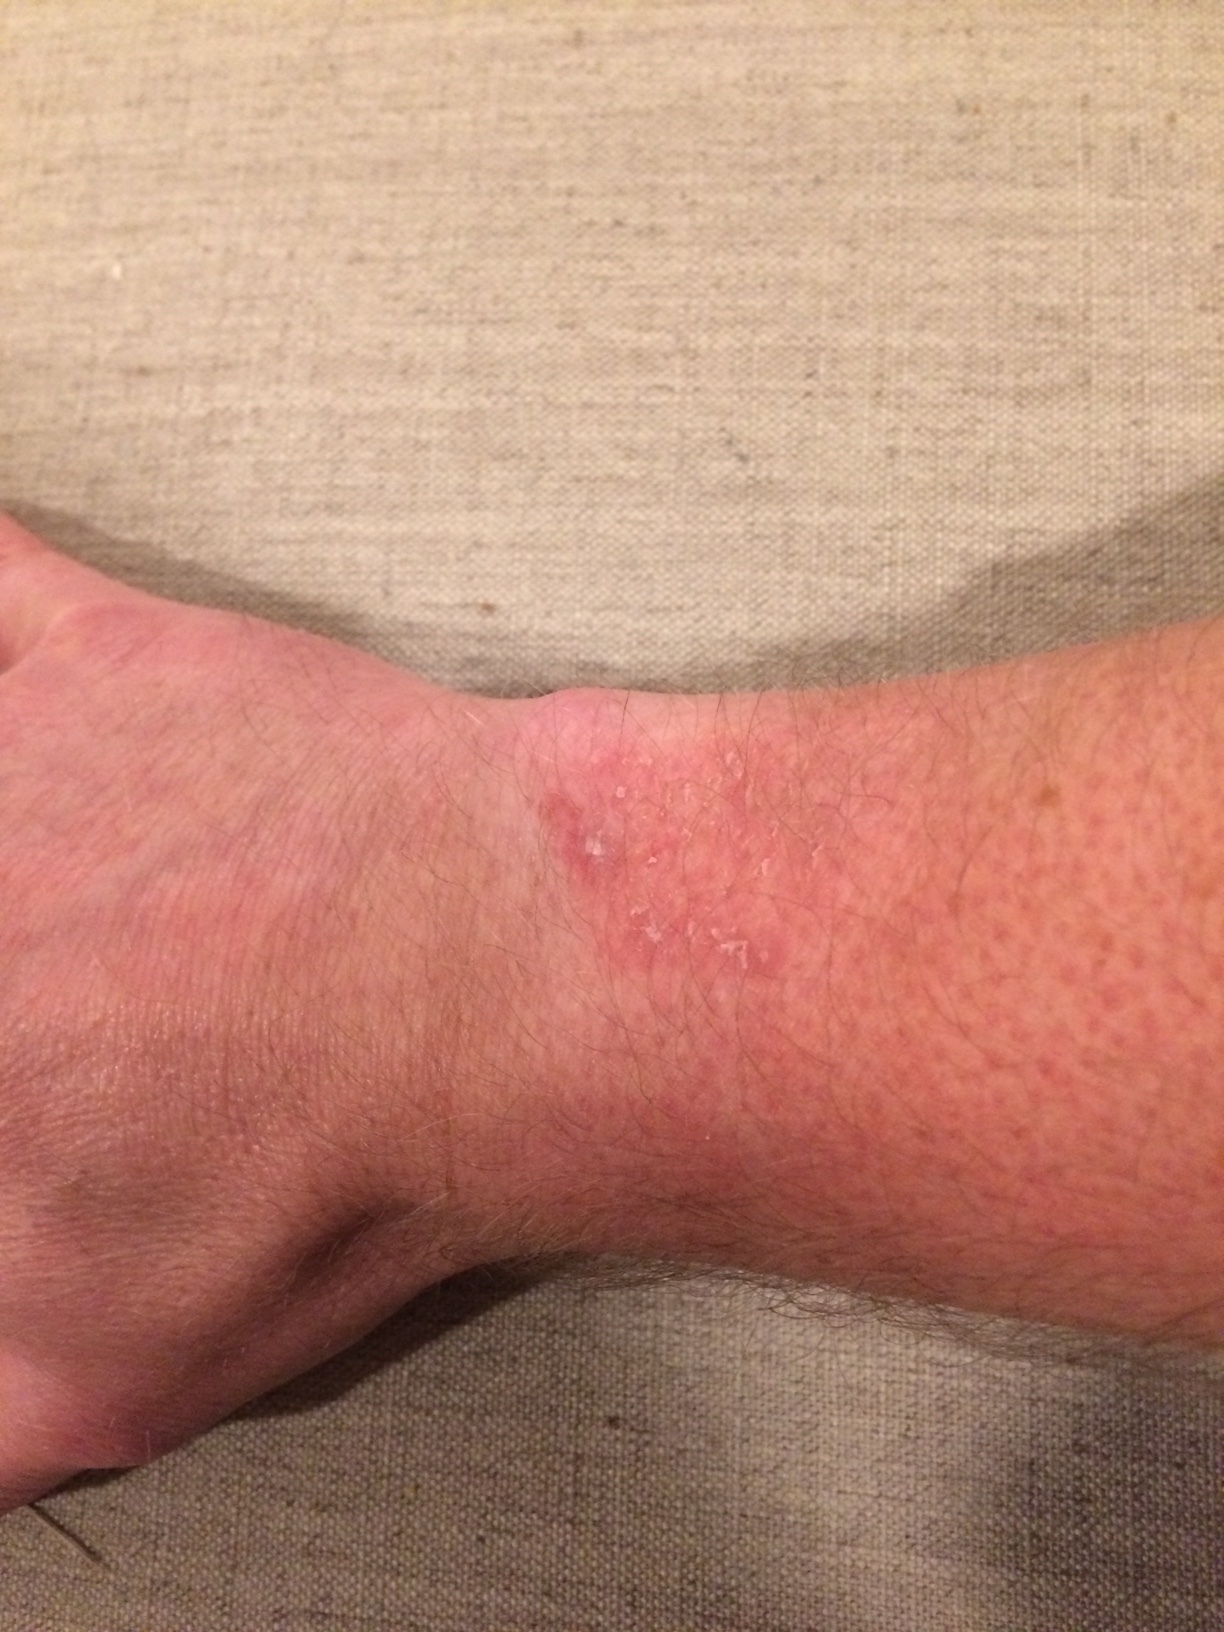 Rash Or Irritation Happening On My Wrist By The Vivoactive 3 Vivoactive 3 Series Health Wellness Garmin Forums